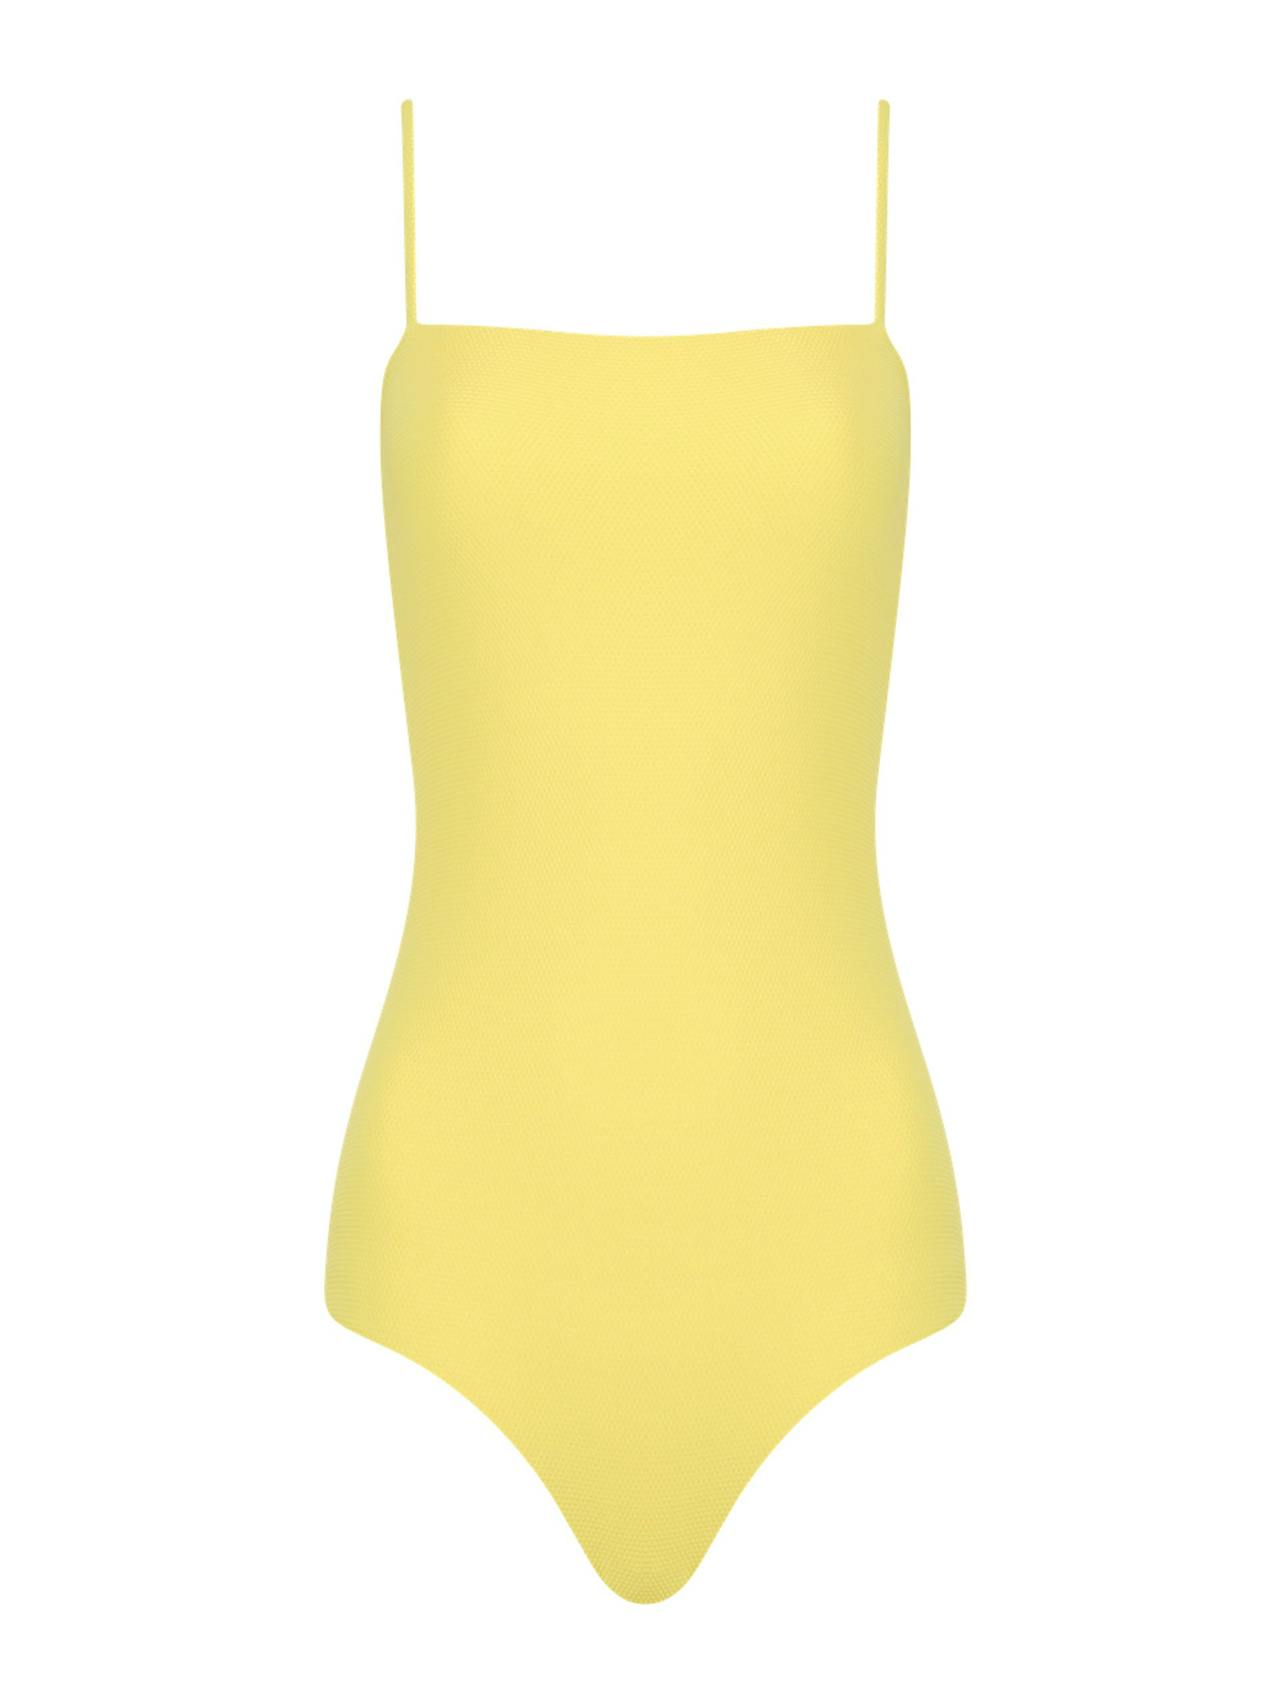 The Edie swimsuit in citron